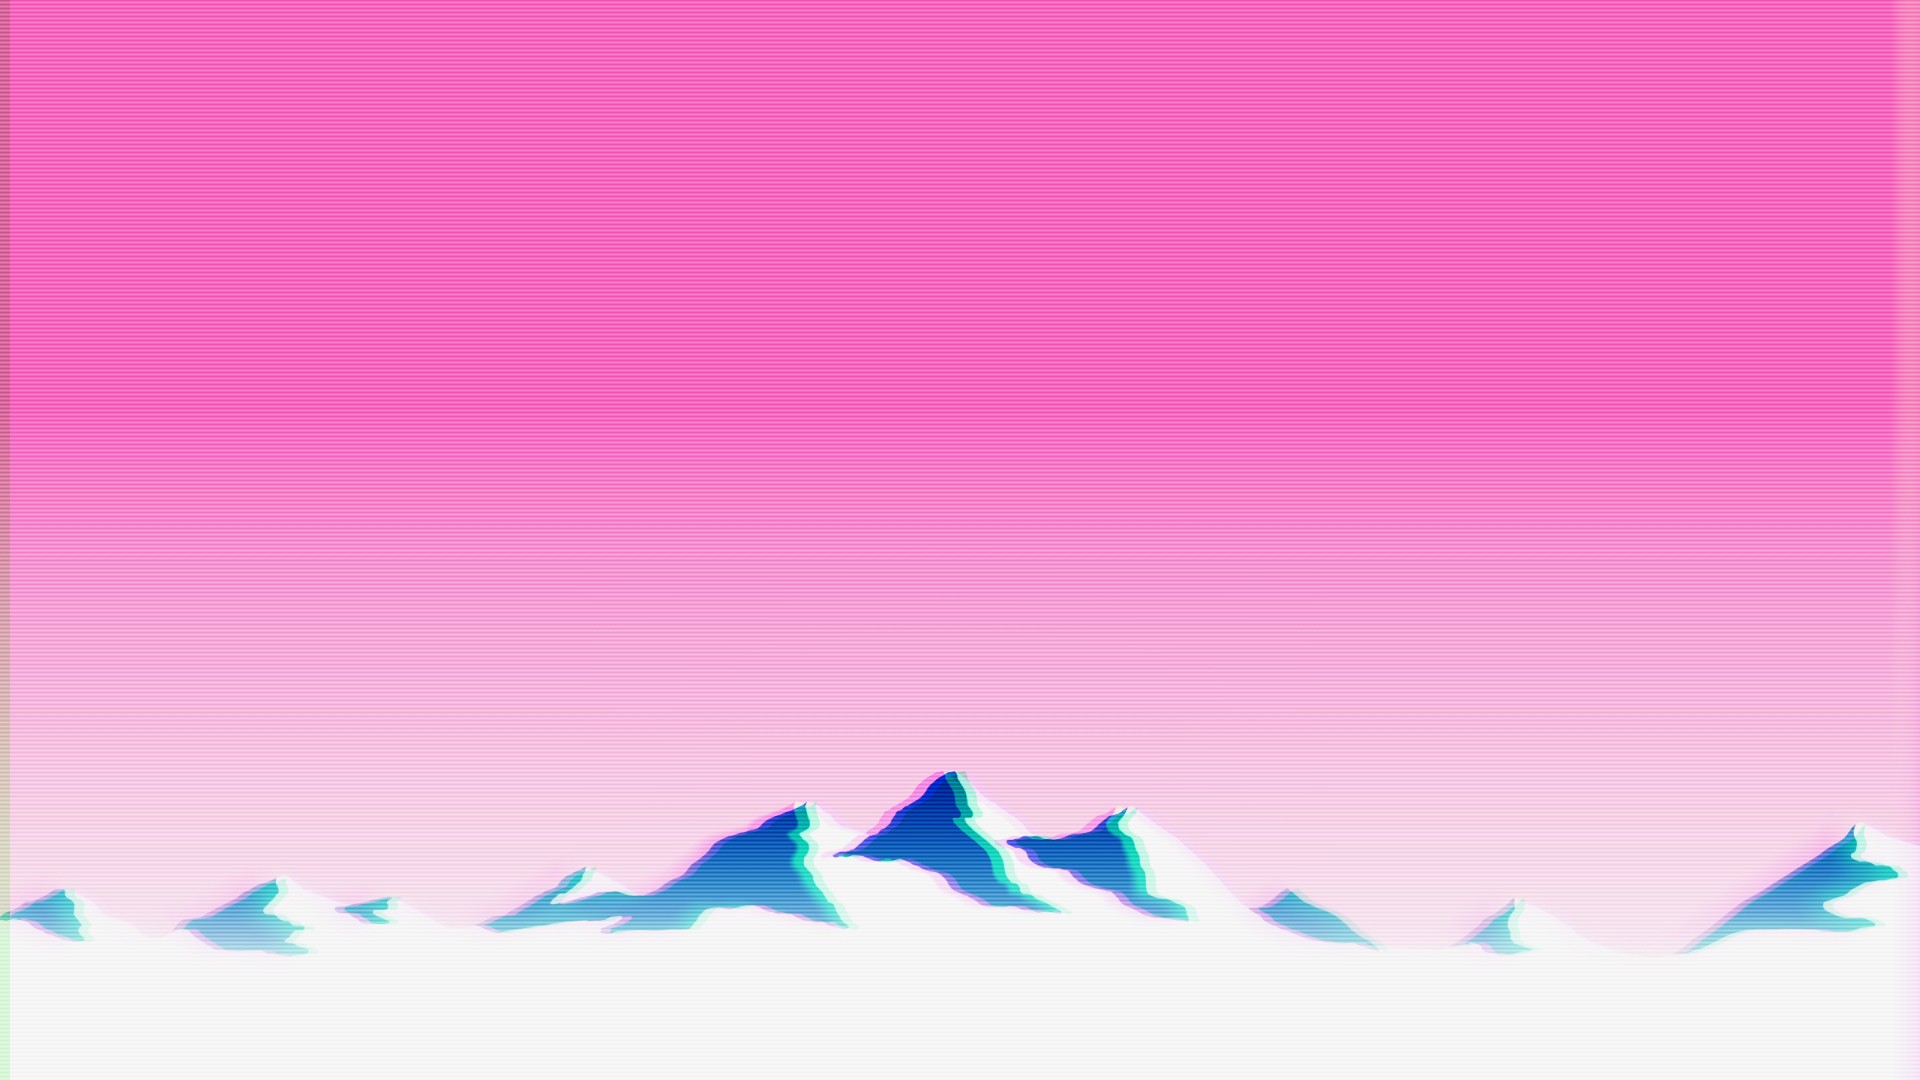 General 1920x1080 vaporwave glitch art mountains landscape pink background gradient digital art